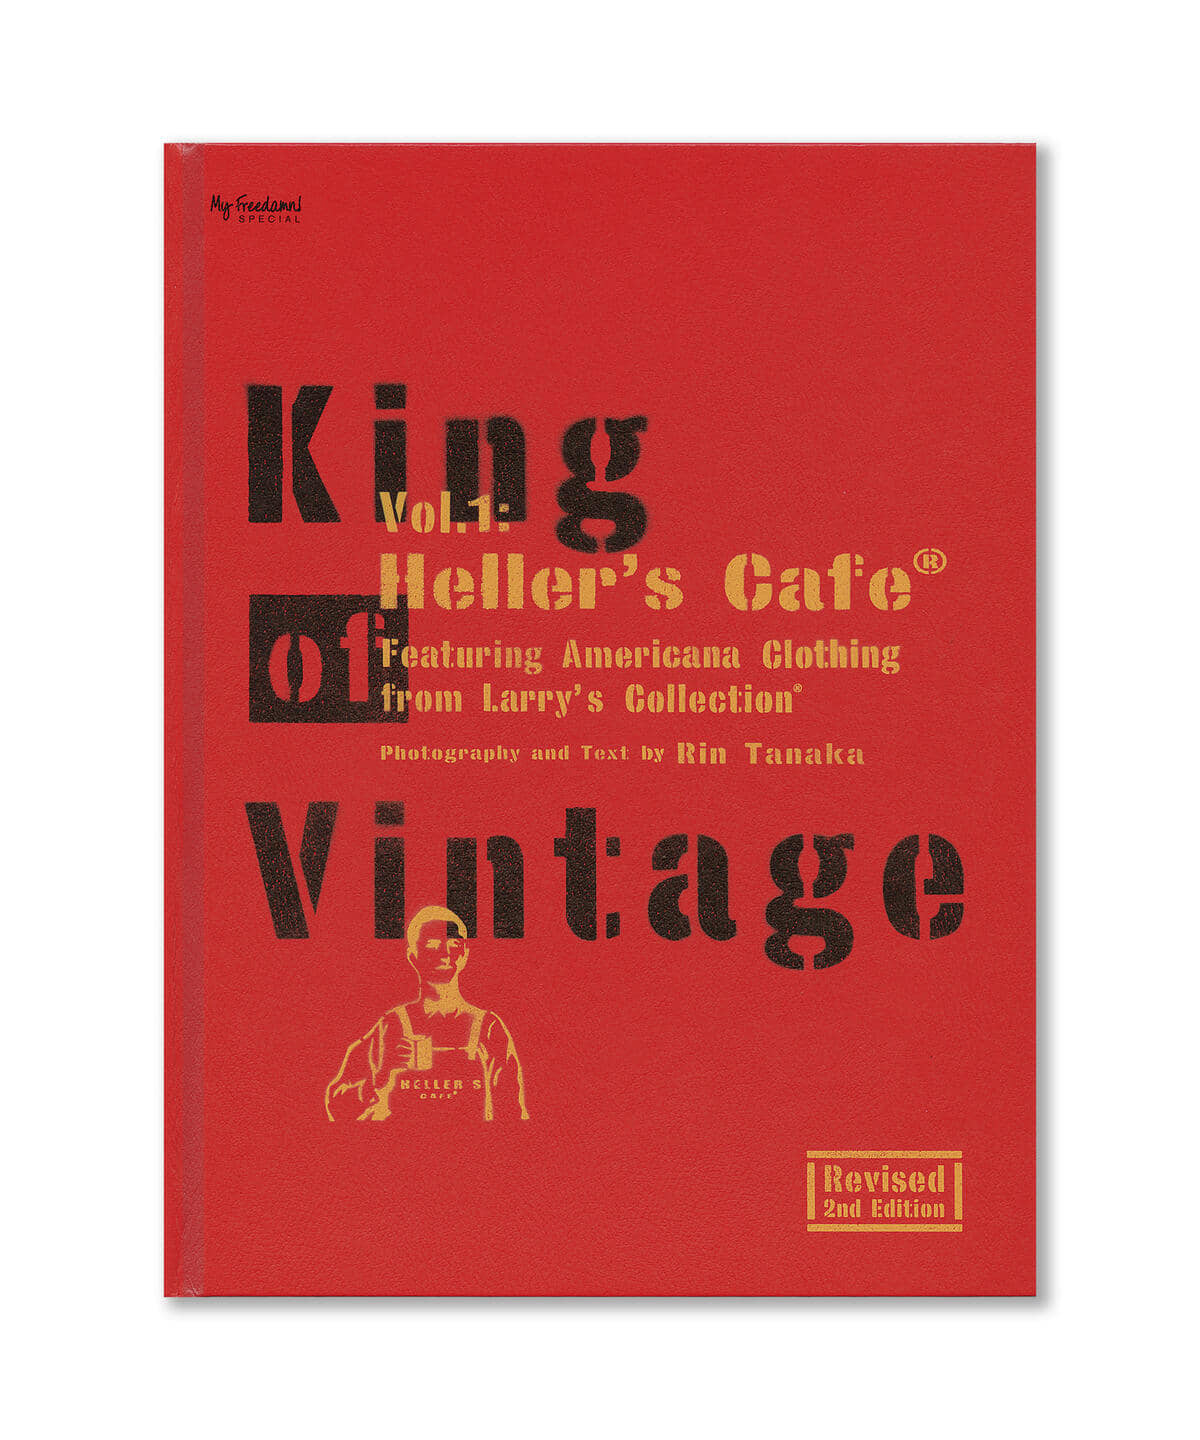 king of vintage(本)BOOK全158ページヴィンテージヘラーズカフェウエア